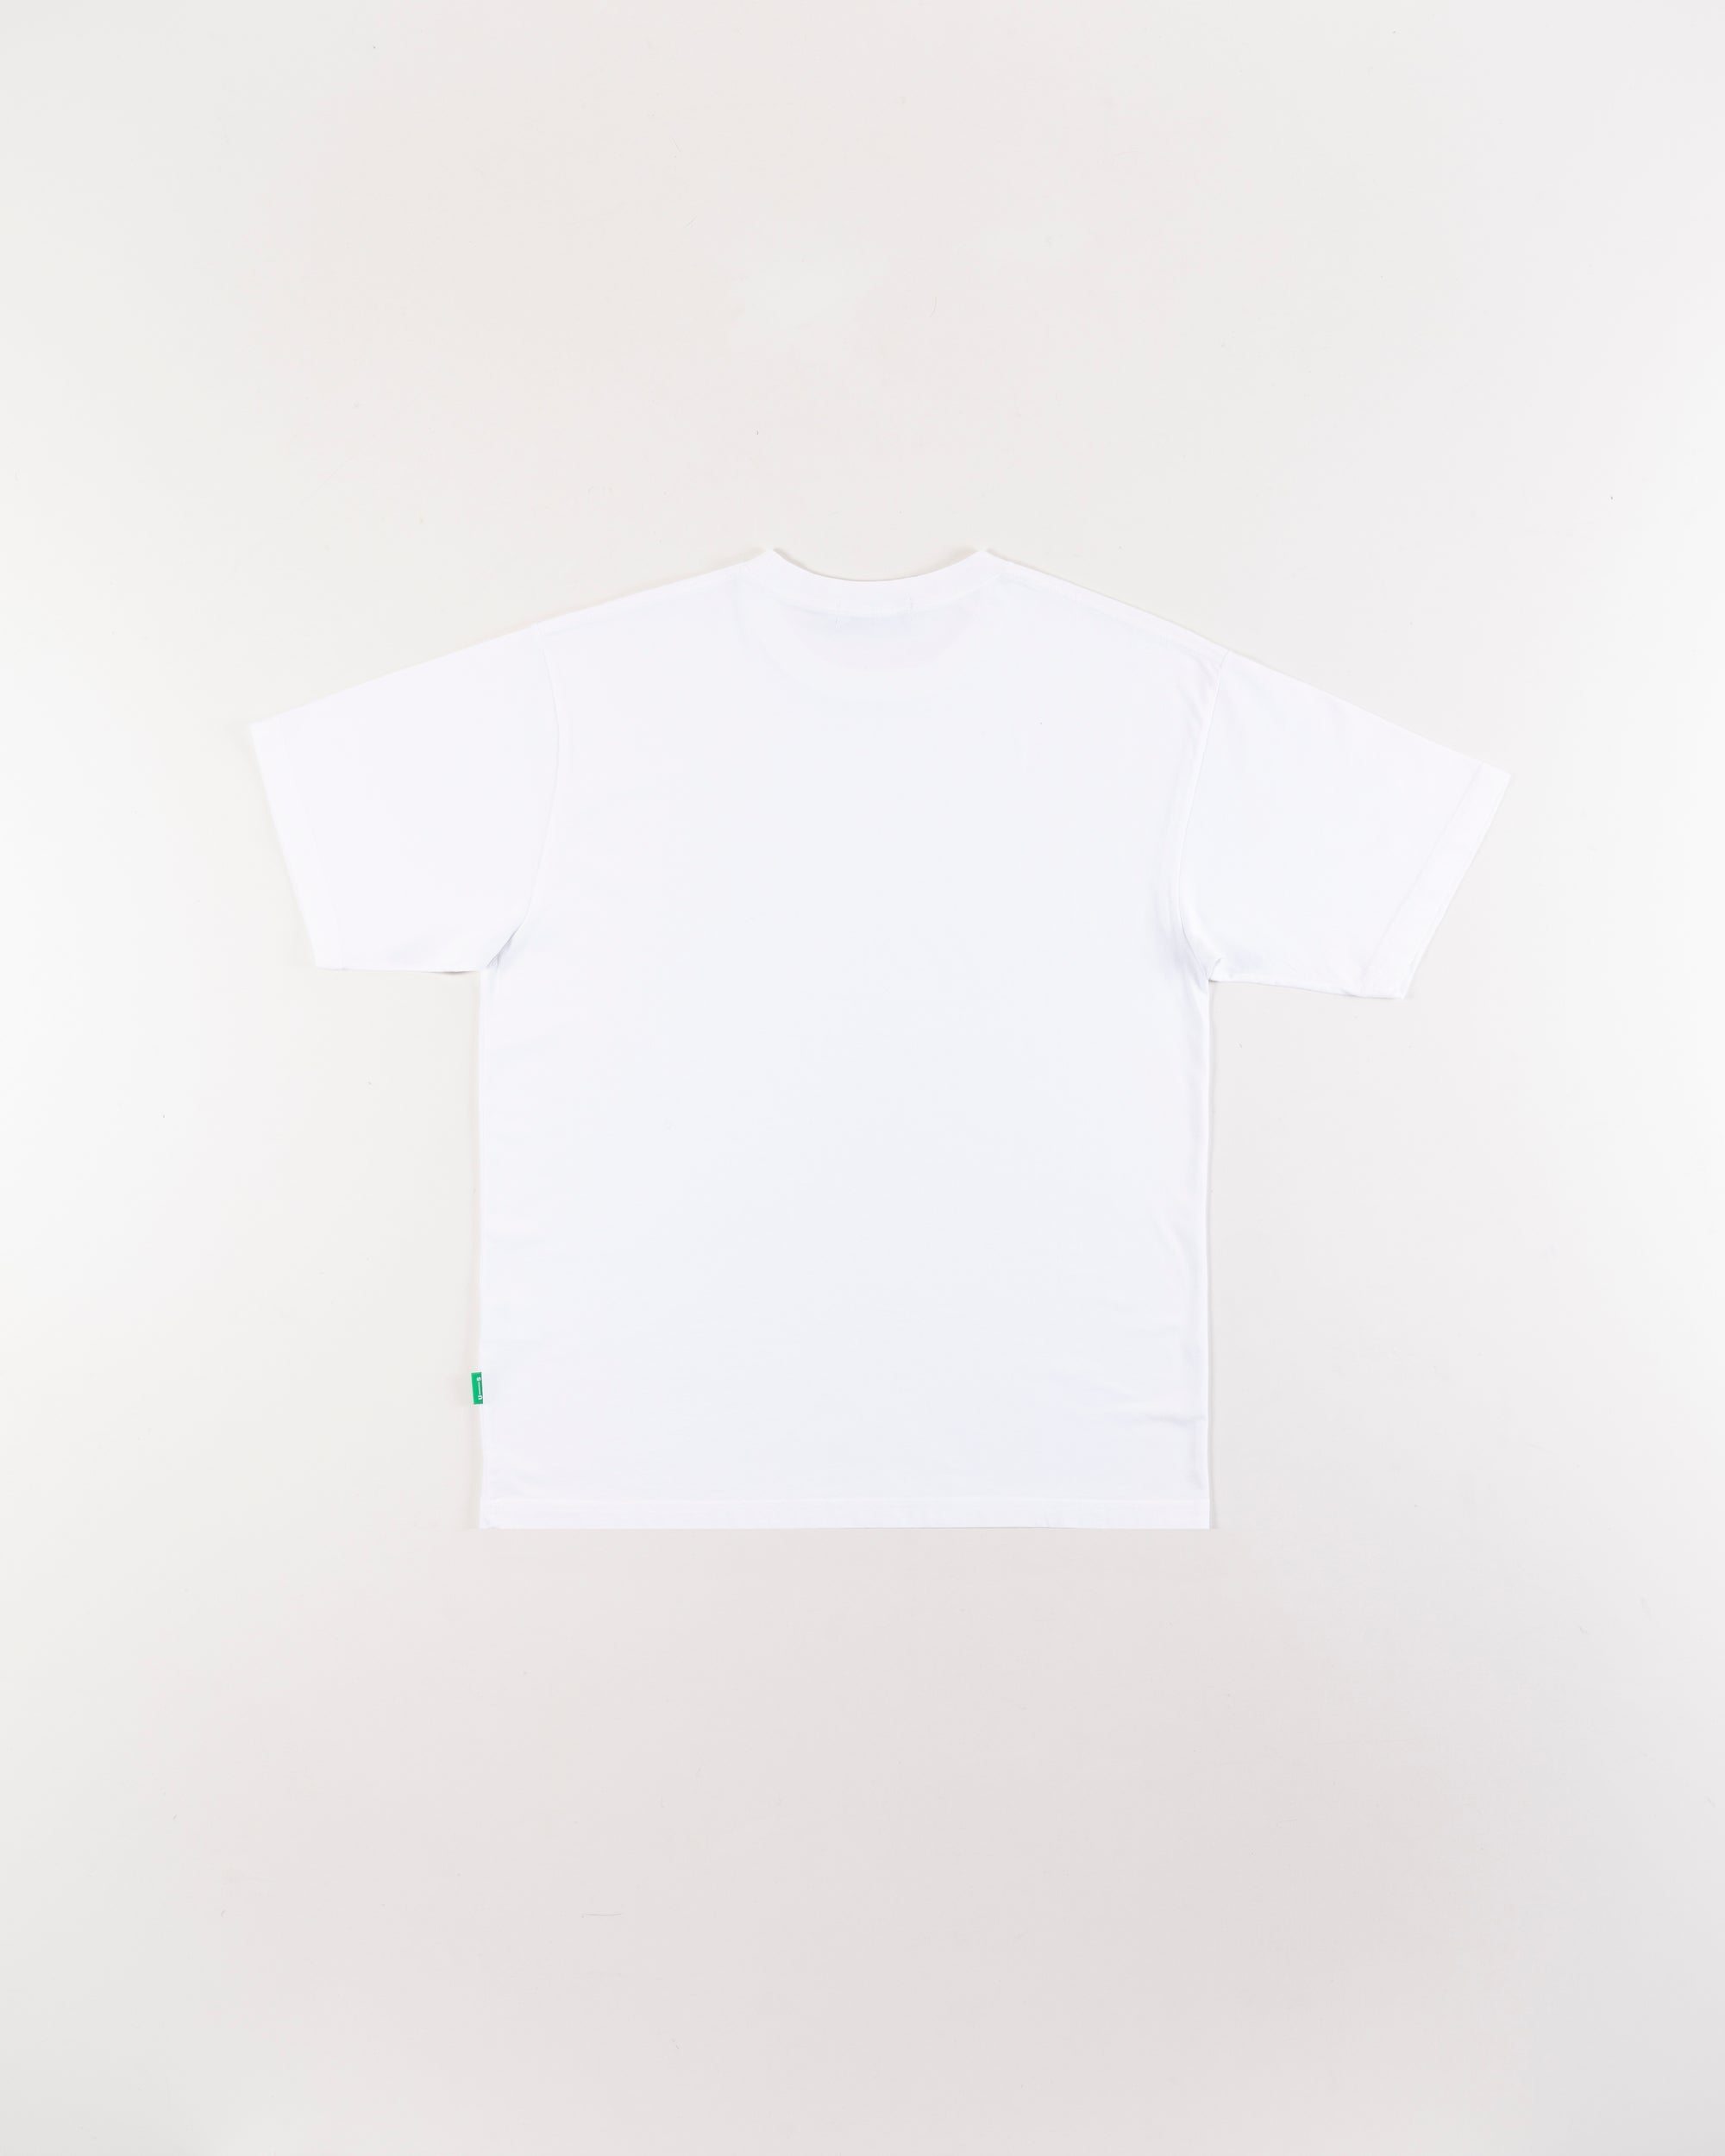 Silent But Radical T-Shirt (white)